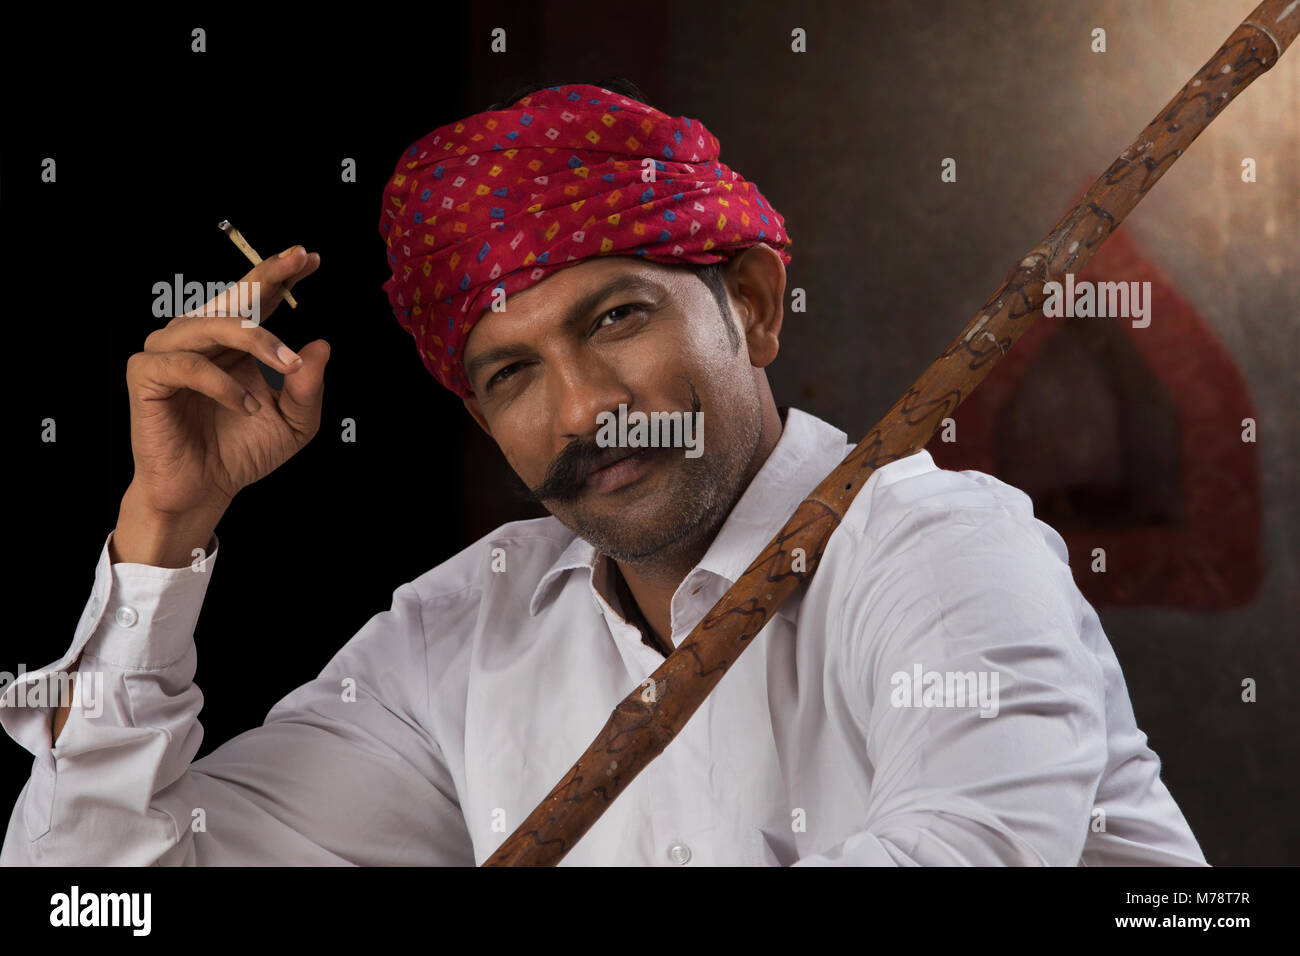 Farmer wearing turban and smoking cigar Stock Photo